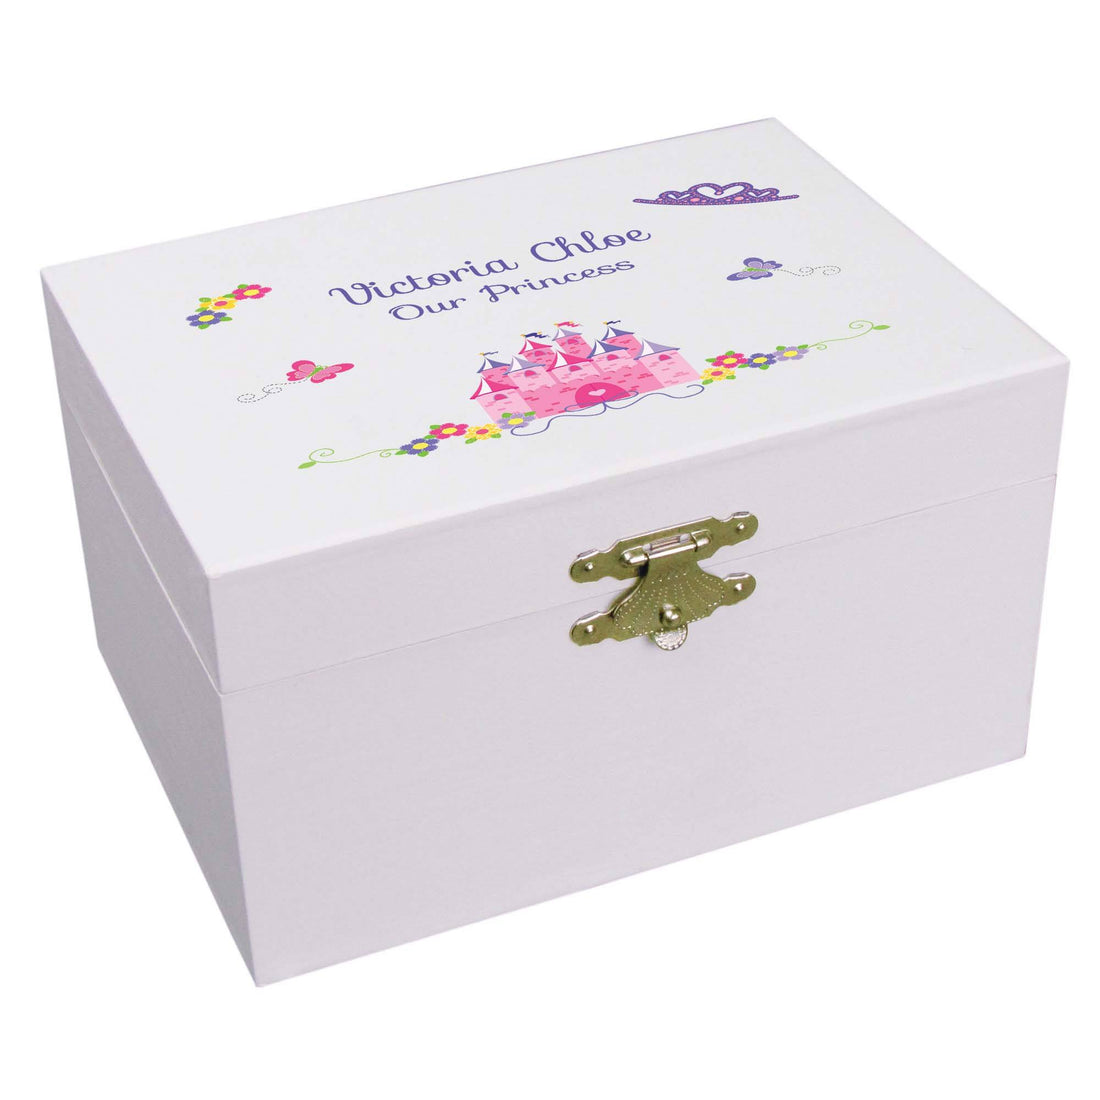 Personalized Ballerina Jewelry Box with Princess Castle design